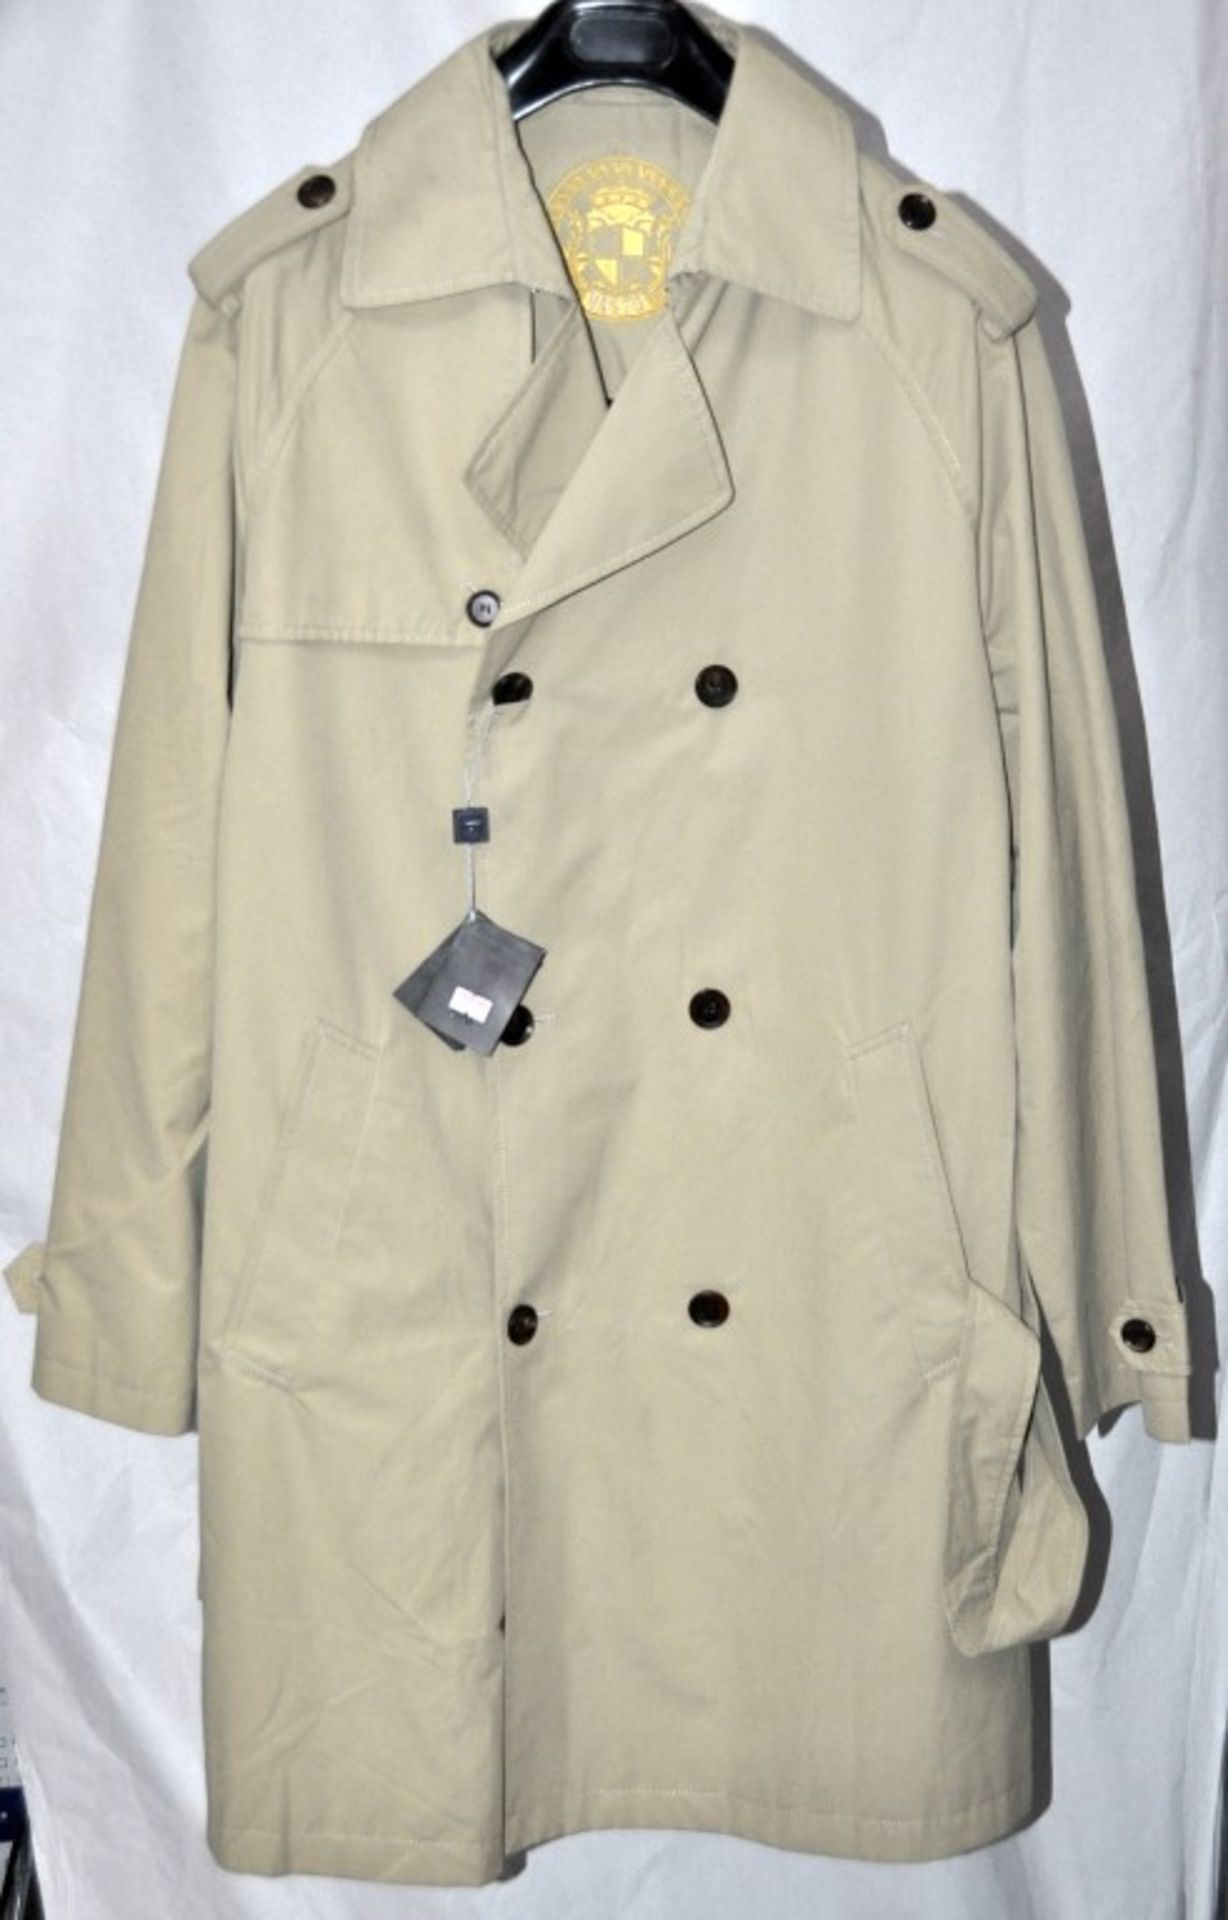 1 x Men's Trench Coat / Long Jacket By International Luxury Brand "Vasto" (BAD7107) – Size: Extra